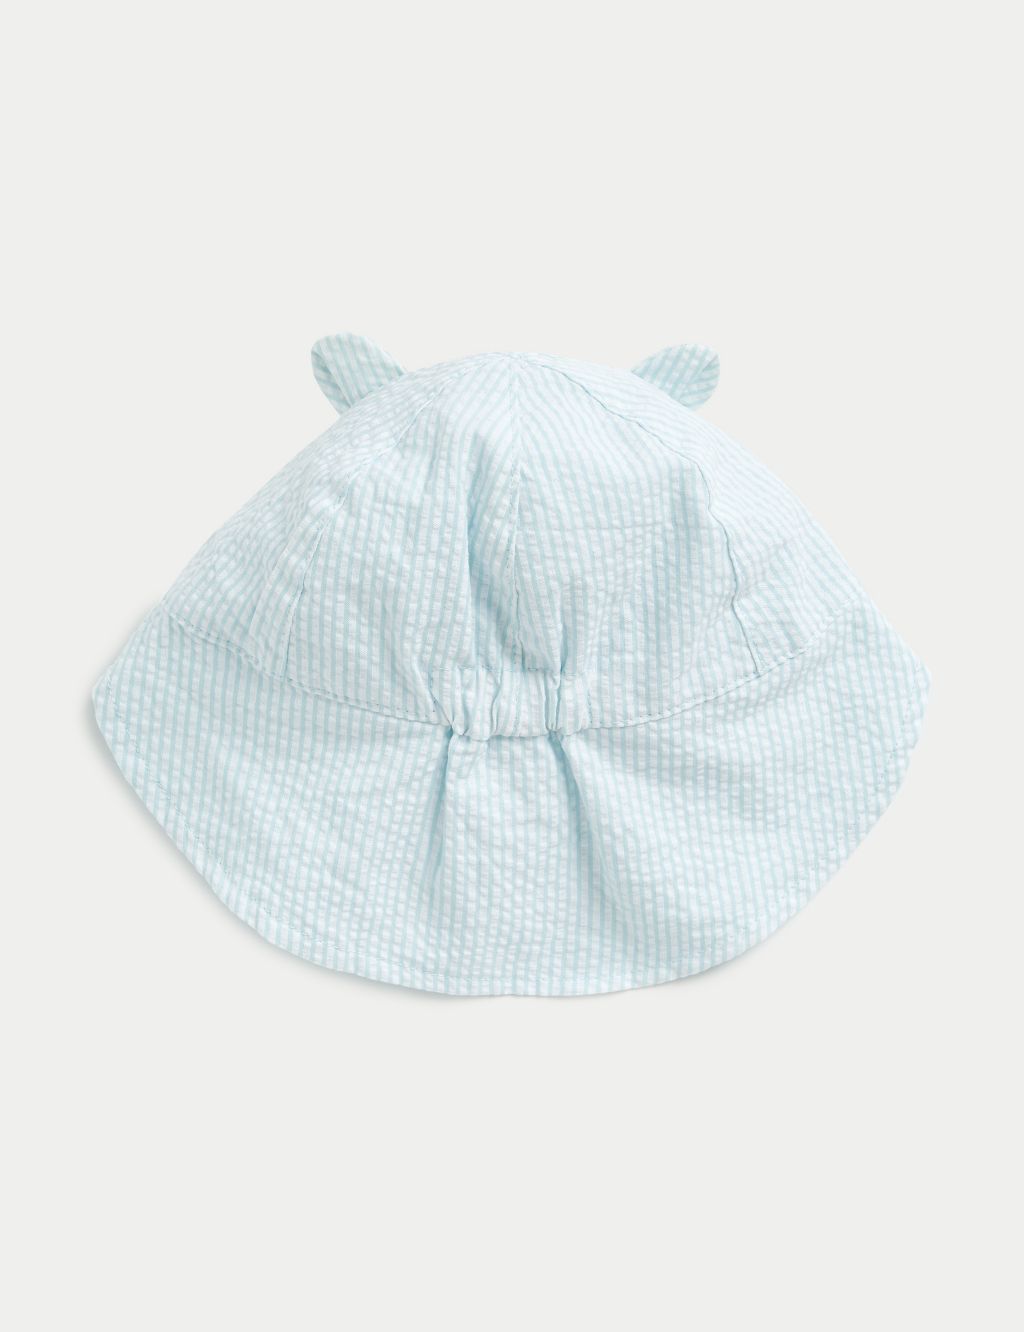 Kids' Pure Cotton Reversible Sun Hat (0-1 Yrs) image 2